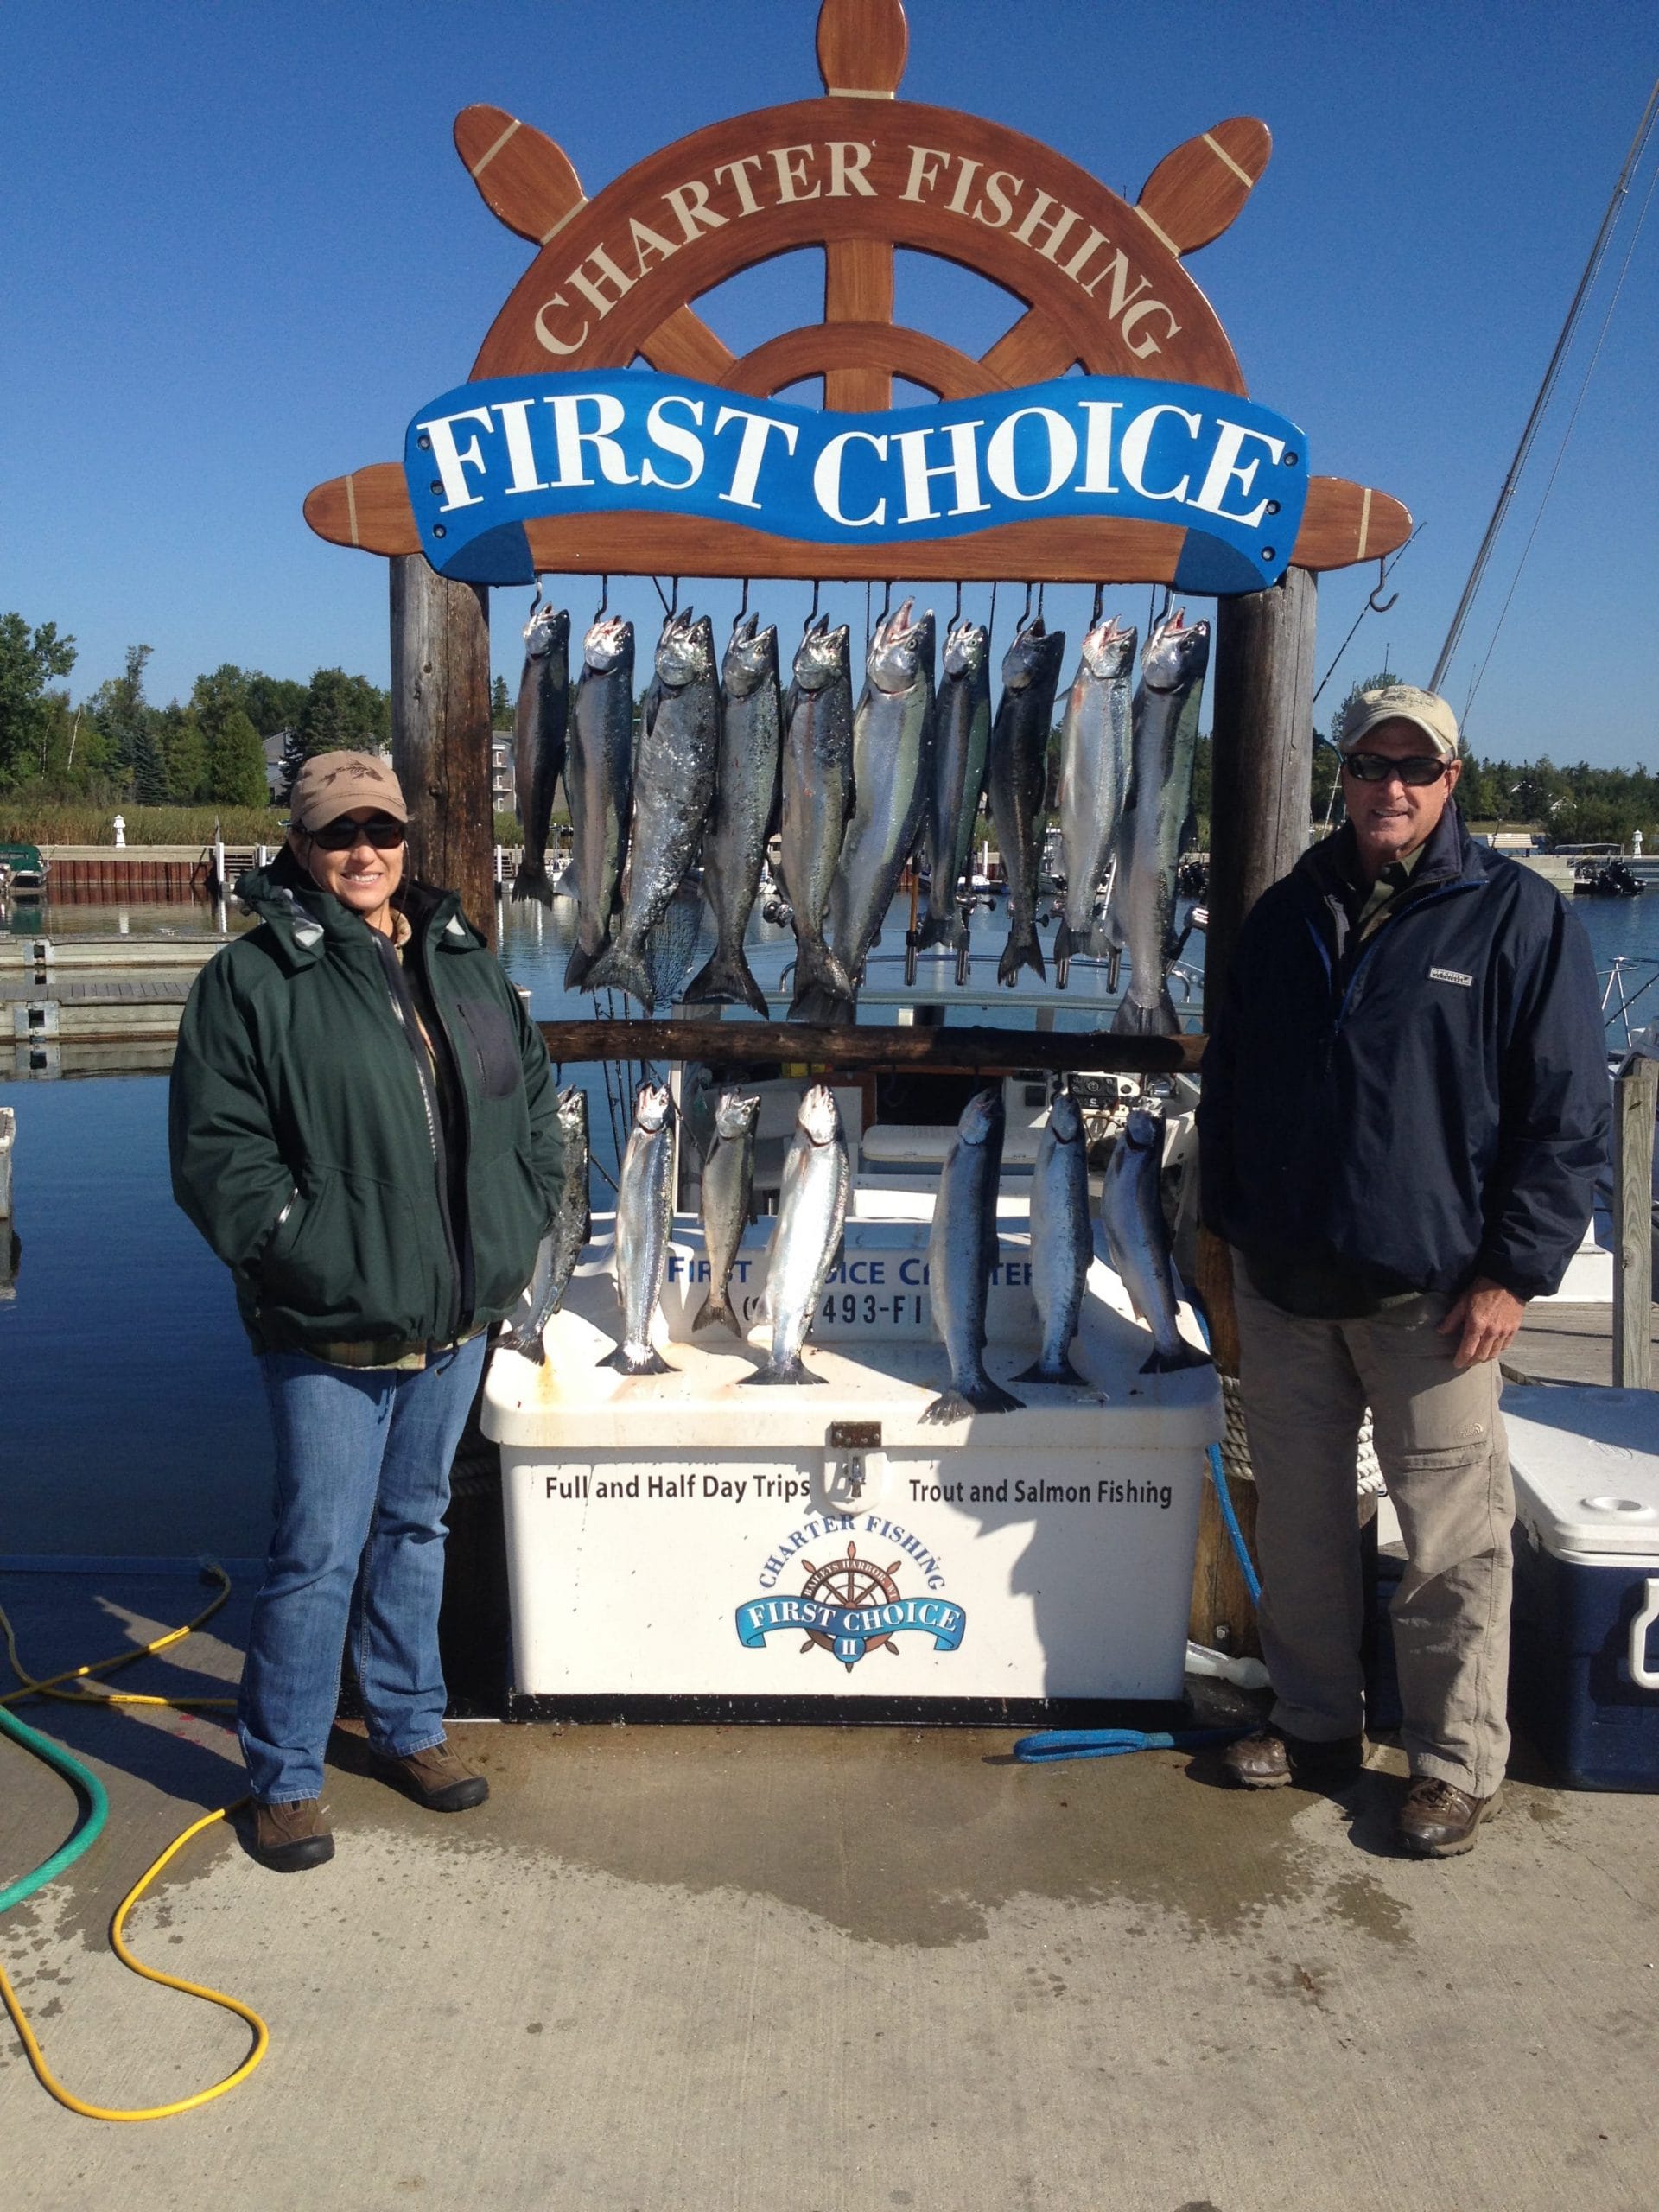 First choice charter fishing trip